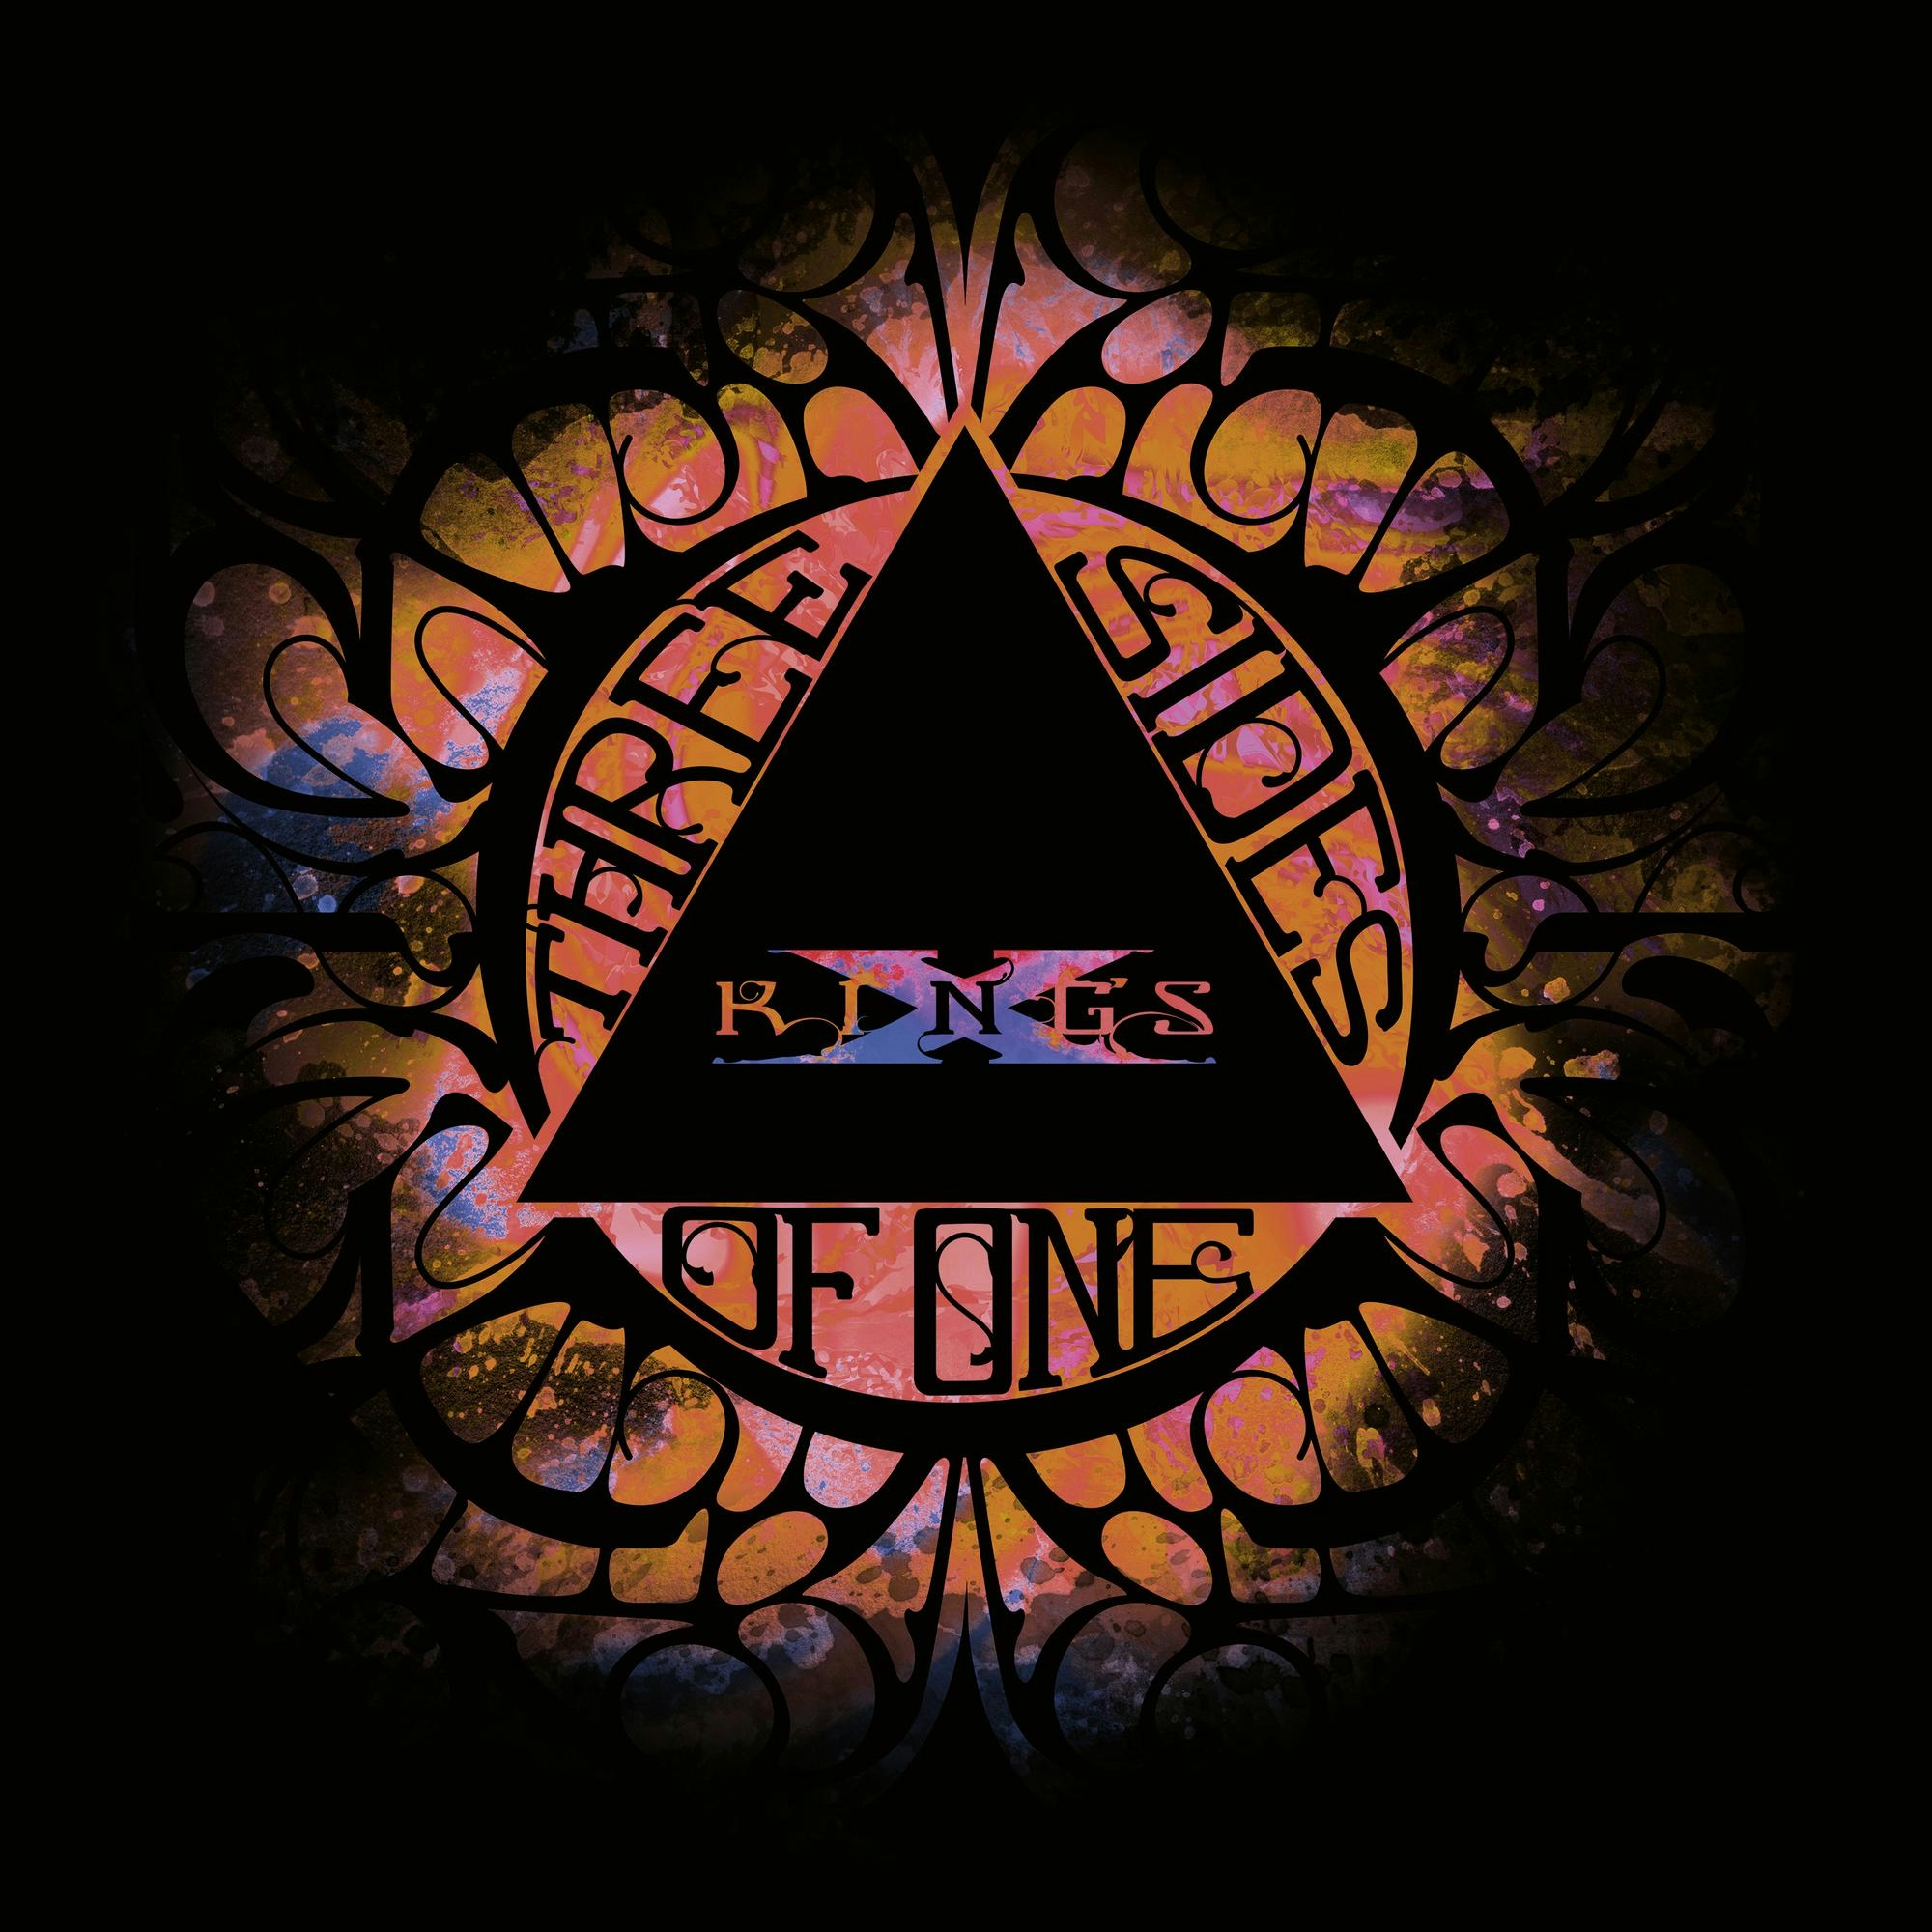 Album artwork for Album artwork for Three Sides of One by King's X by Three Sides of One - King's X